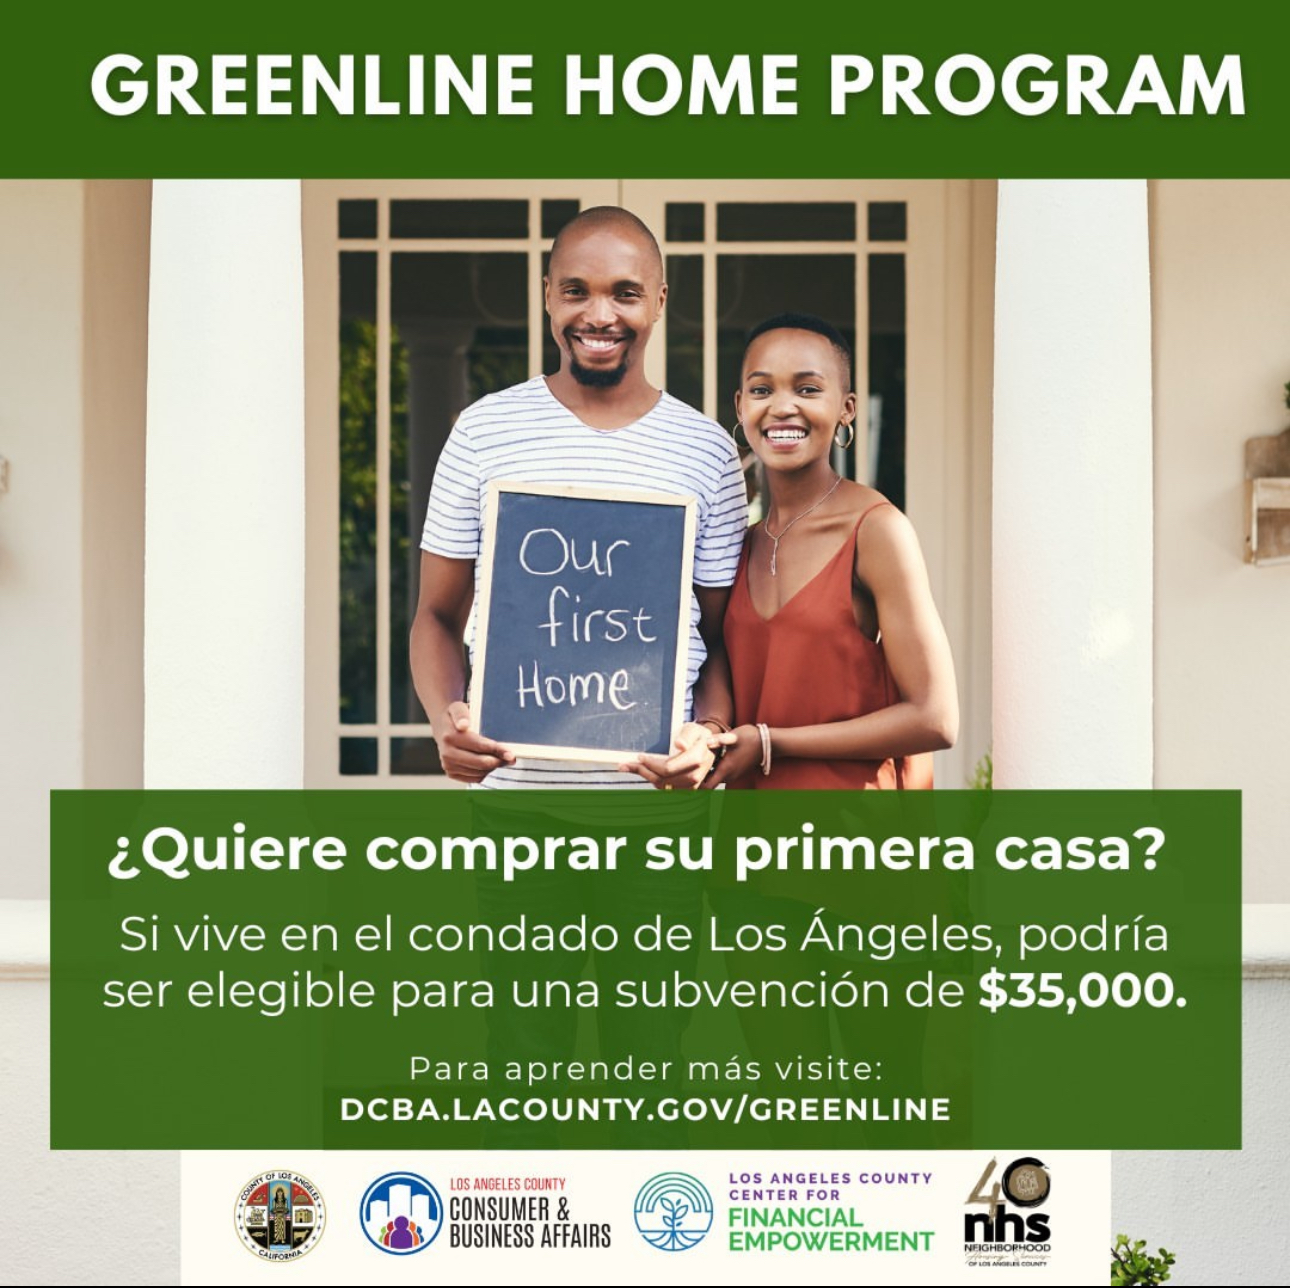 Greenline Home Program